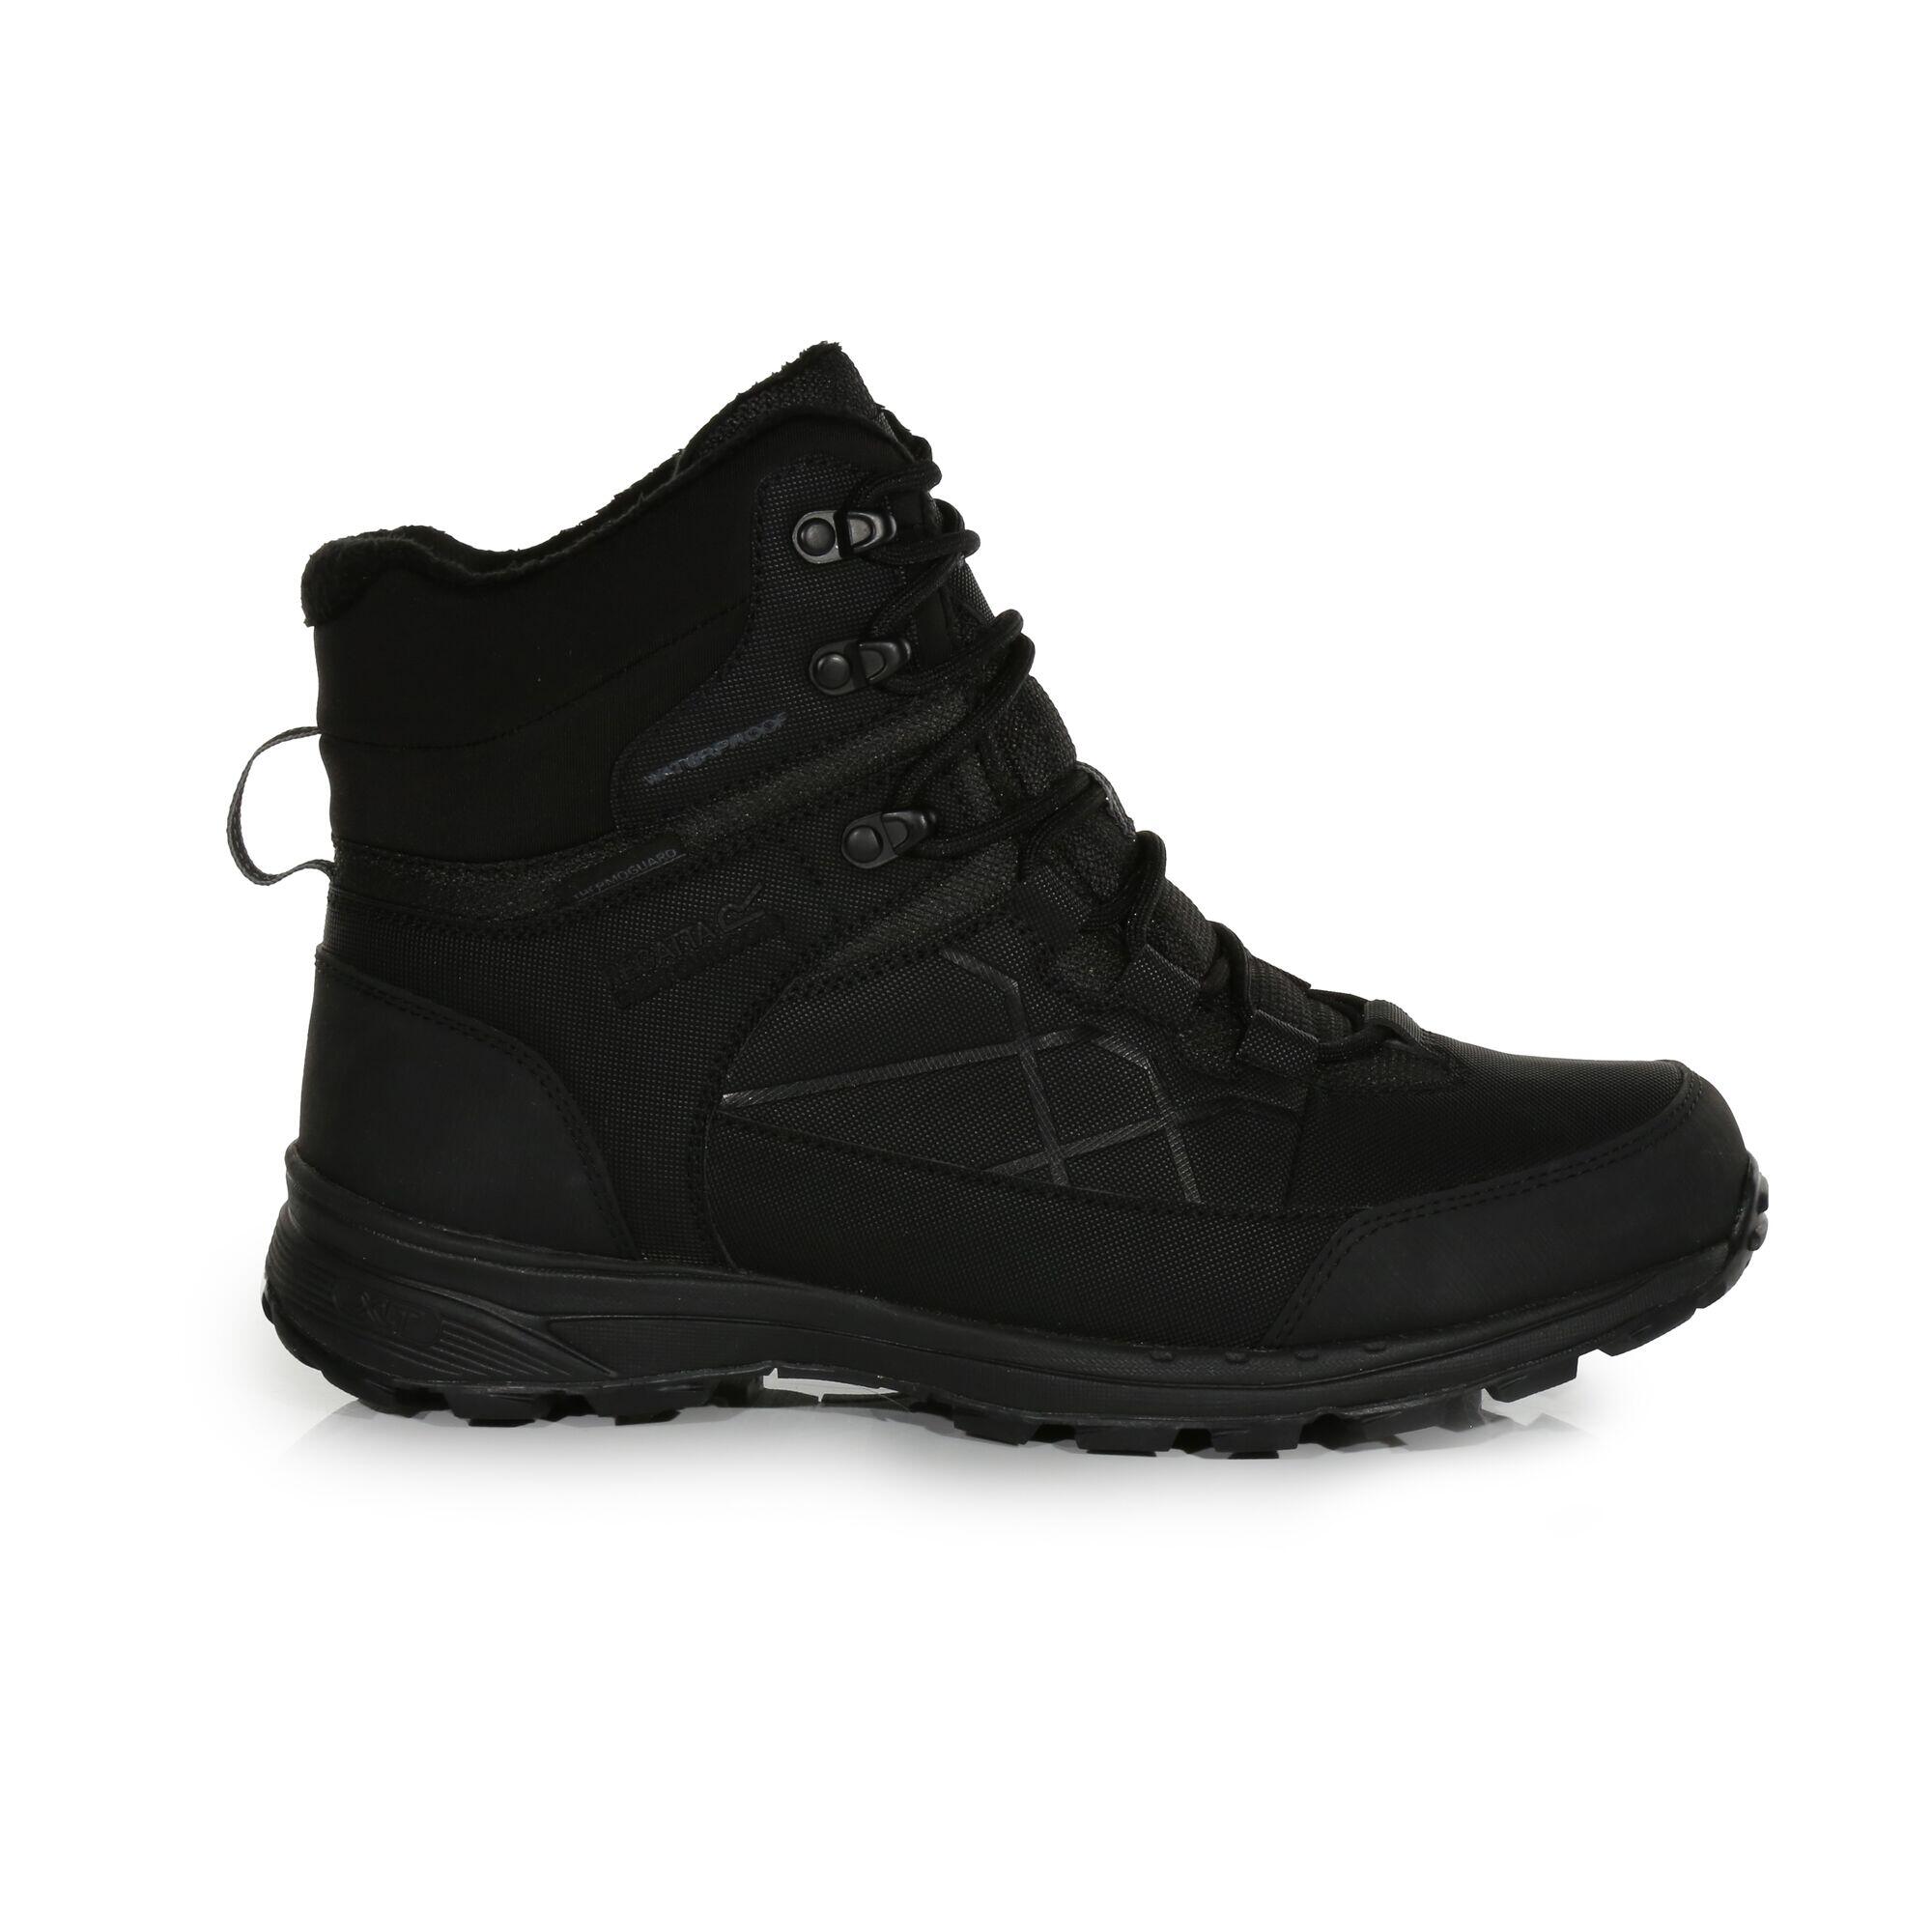 Samaris Men's Hiking Thermo Insulation Boots - Black 1/5